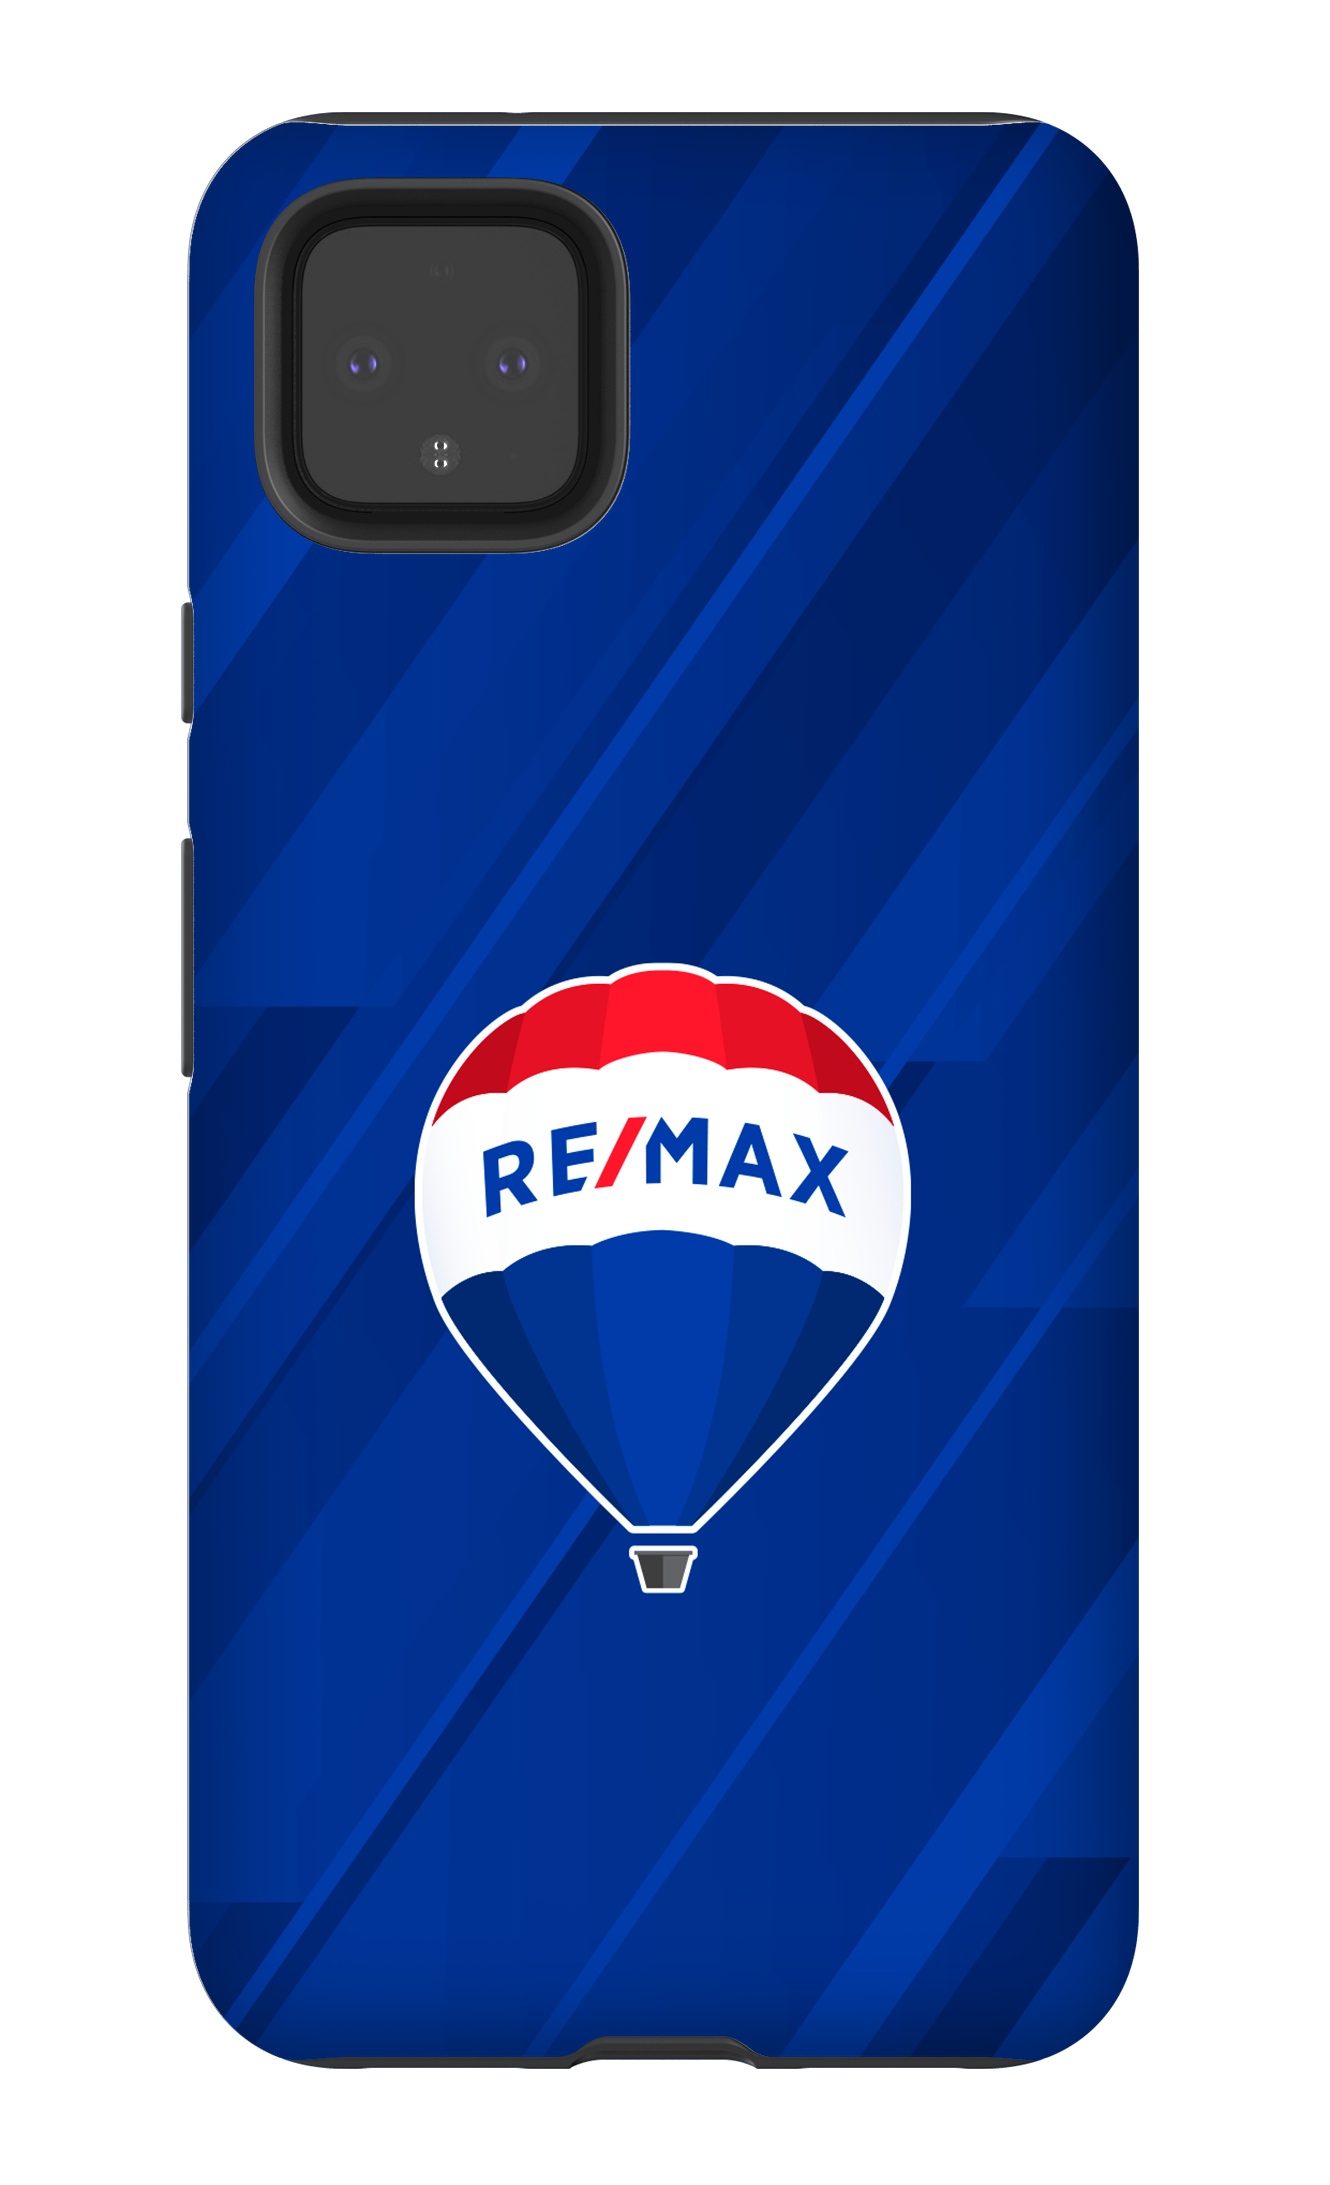 Remax Bleu - Google Pixel 4 XL